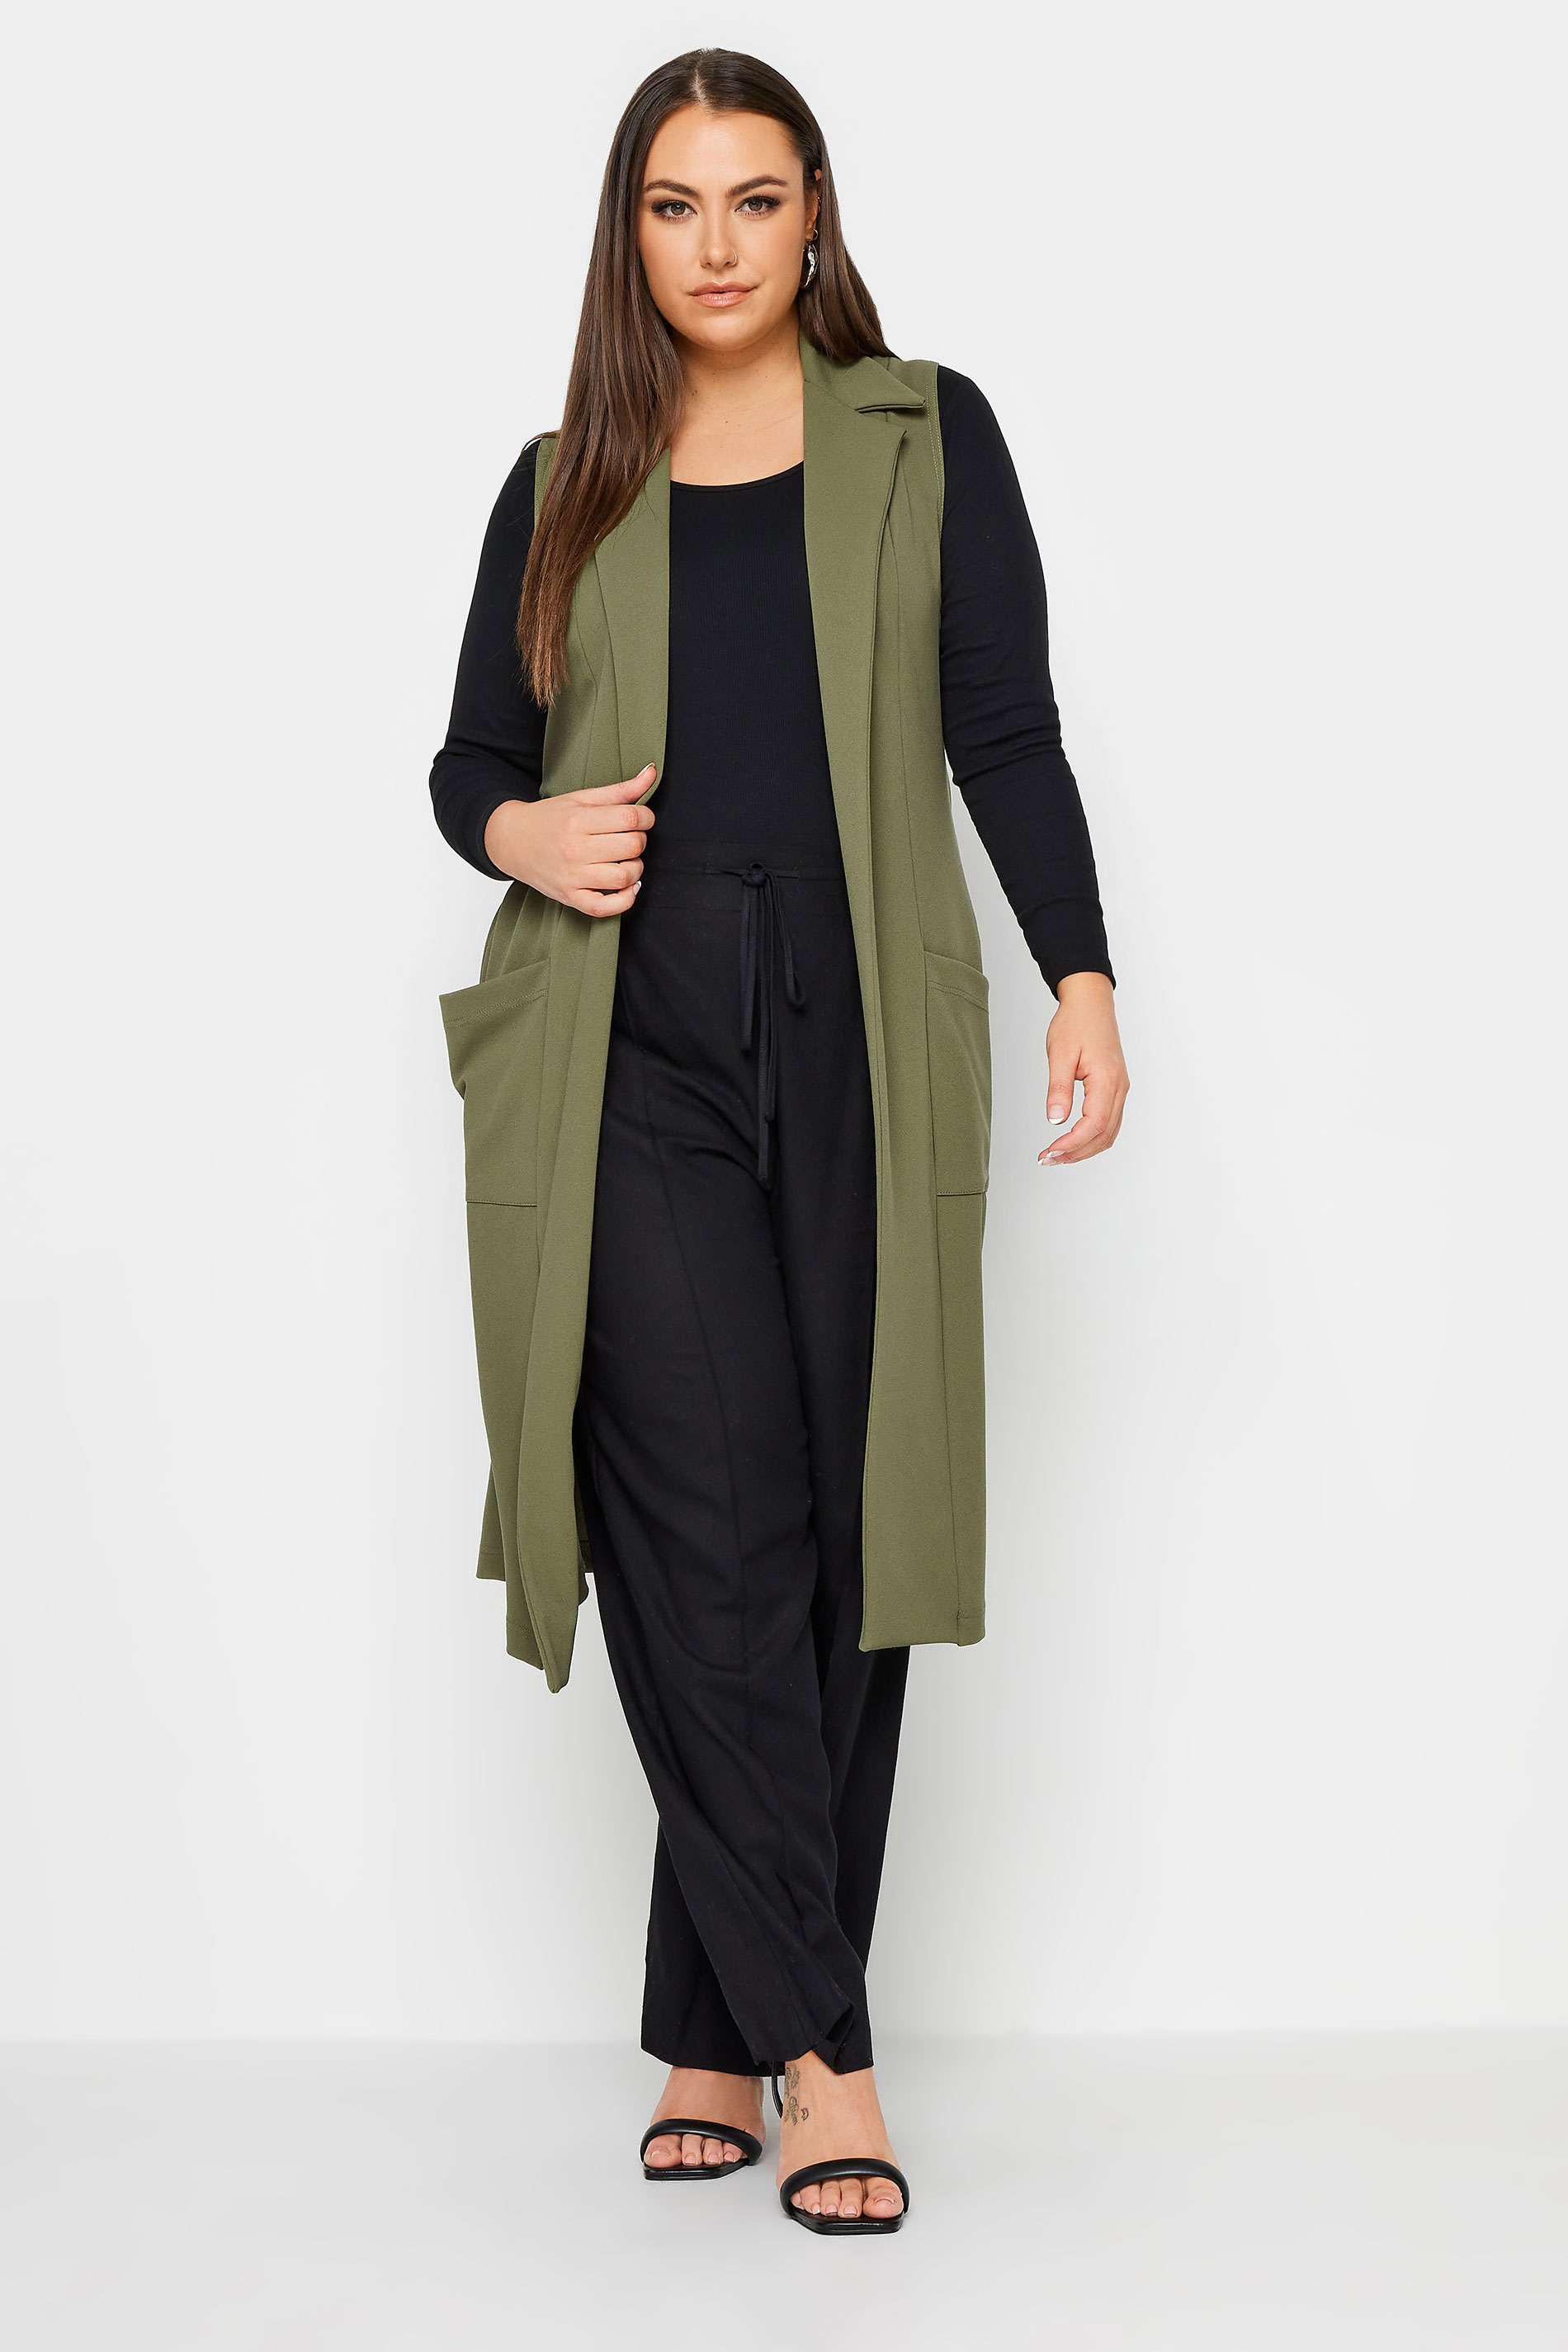 YOURS Plus Size Black Longline Waistcoat | Yours Clothing 2